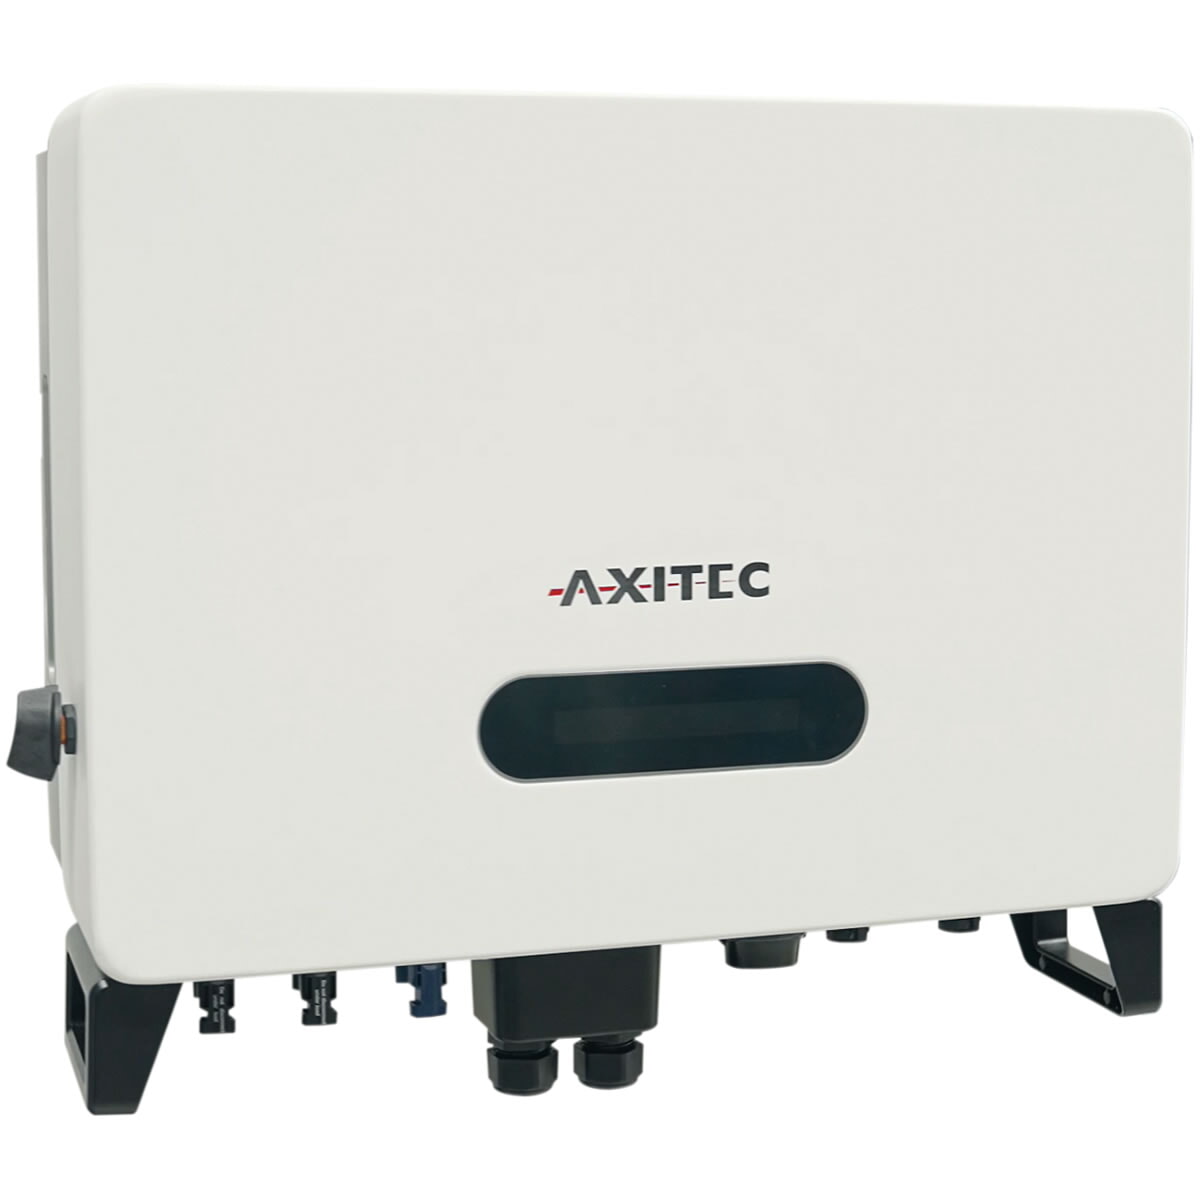 AXITEC Axihycon 8H Hybrid-Wechselrichter, 3-Phasig